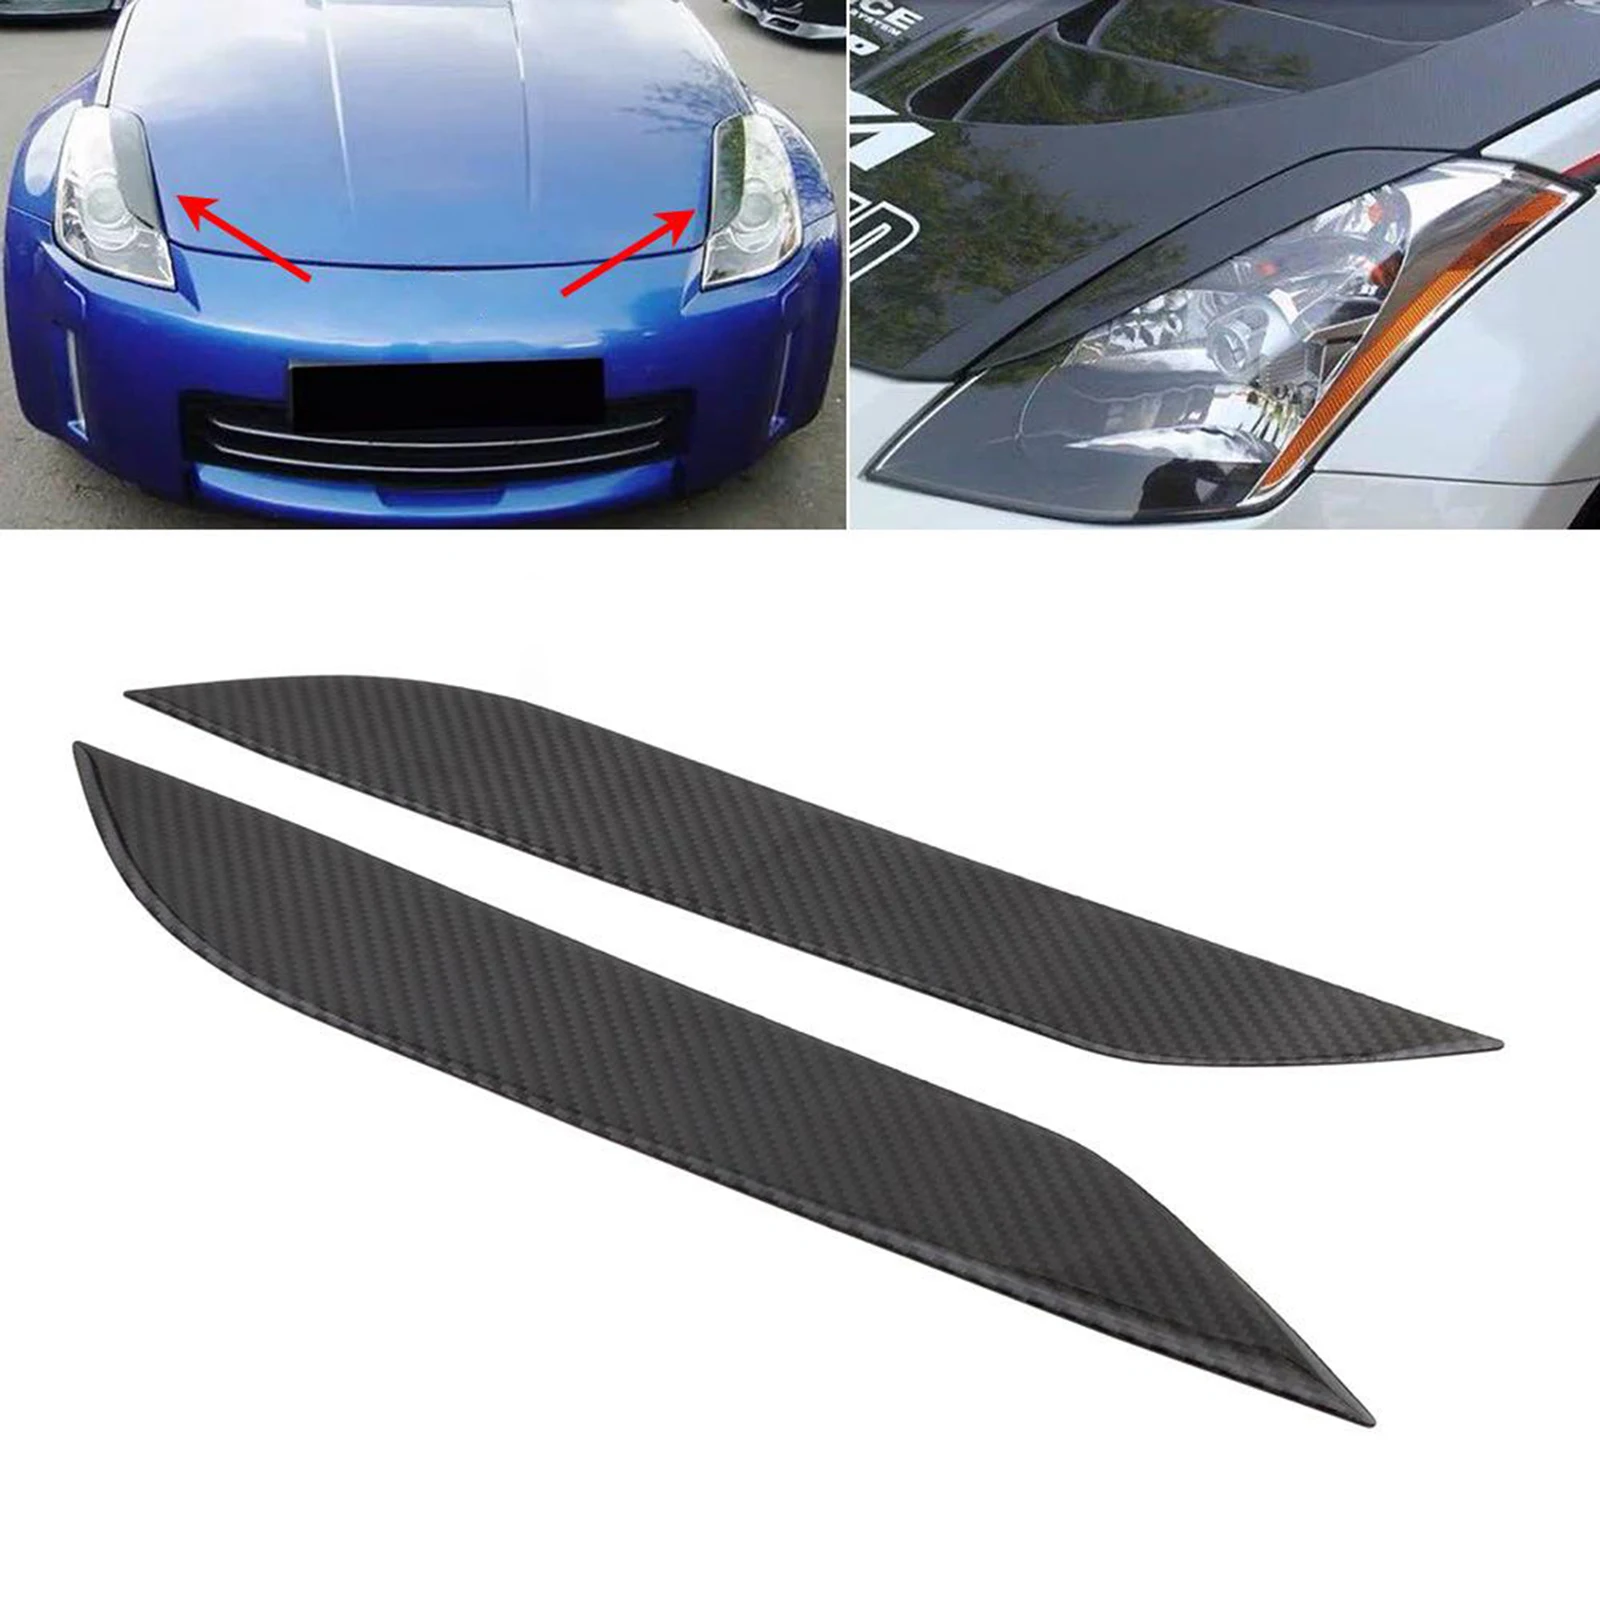 Front Bumper Spoiler Lip, Carbon Fiber Car Front Bumper Fins Splitters Canards Decorative Eyelids Eyebrows for Nissan 350Z